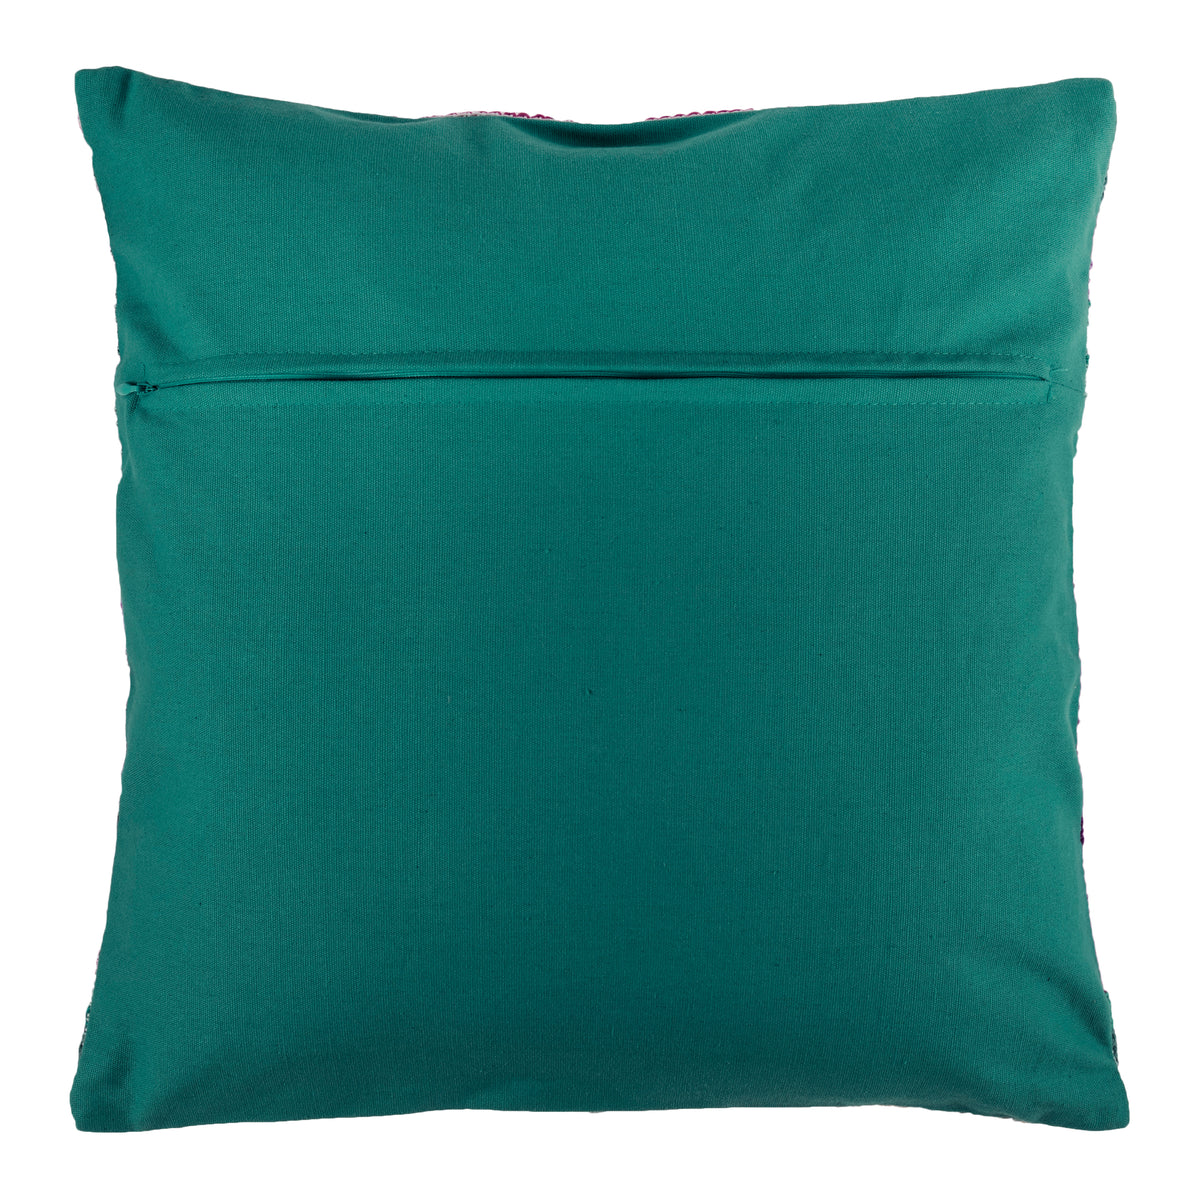 Cross Stitch Kit: Cushion: Father Christmas